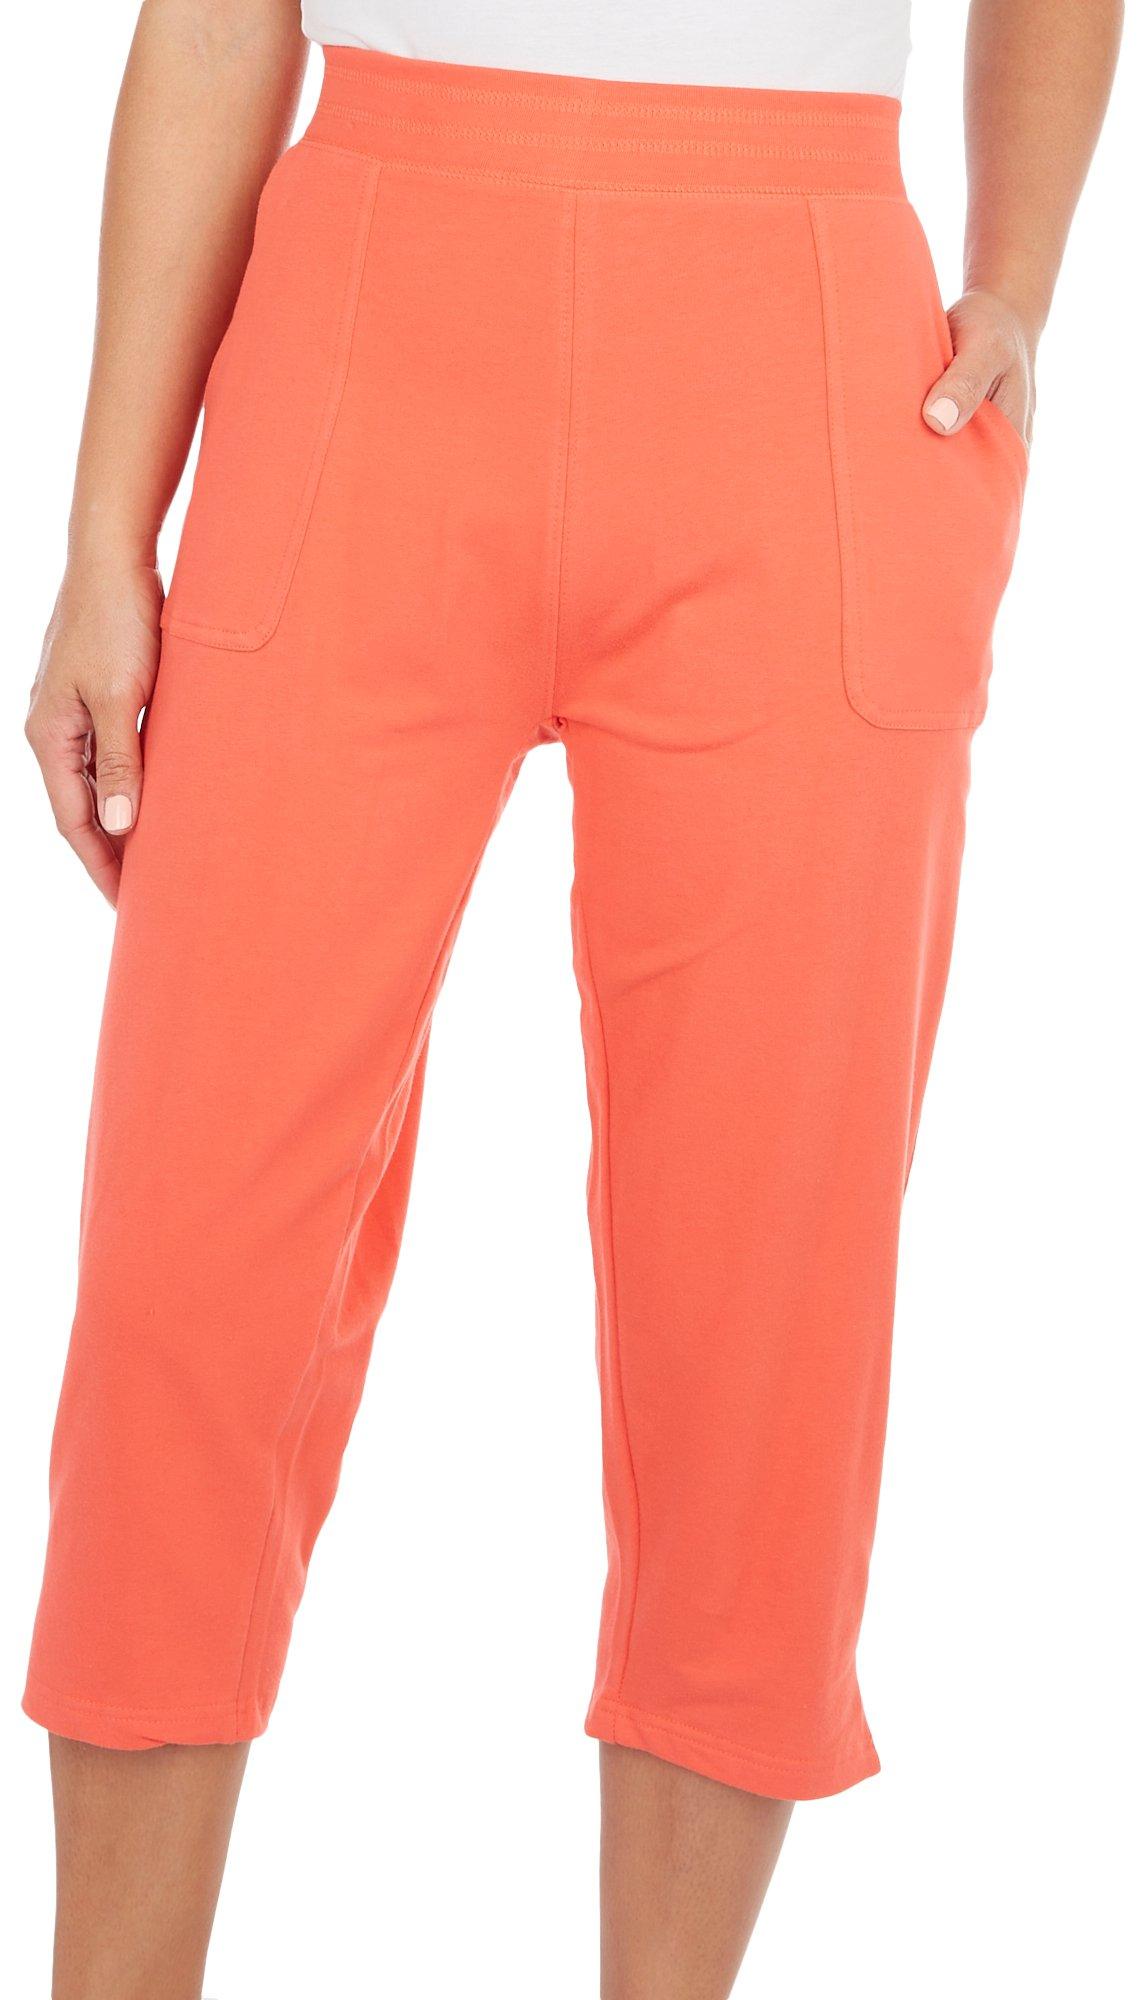 Women's Orange Cropped Pants